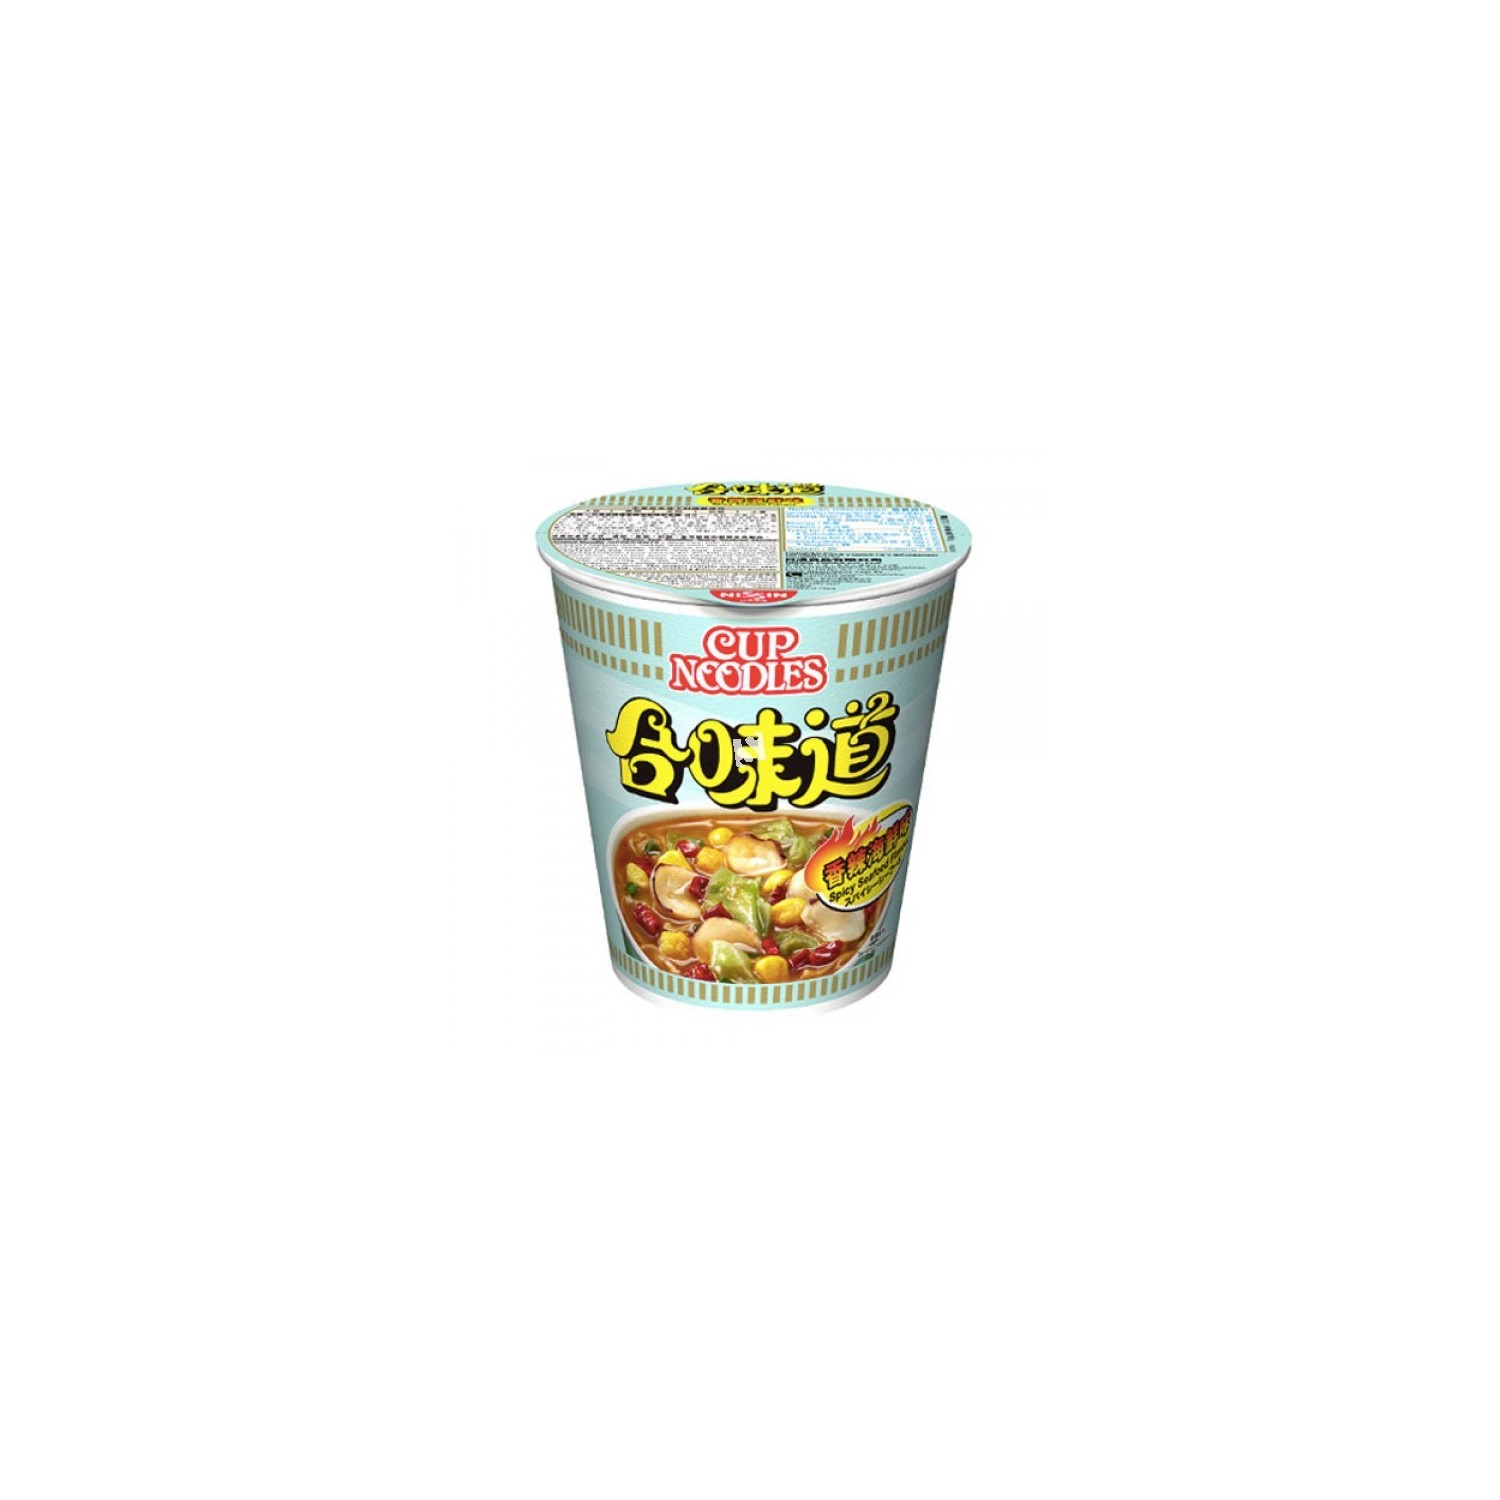 Nissin Noodles - Spicy Seafood (合味道 香辣海鲜味 杯面) Cup Noodle